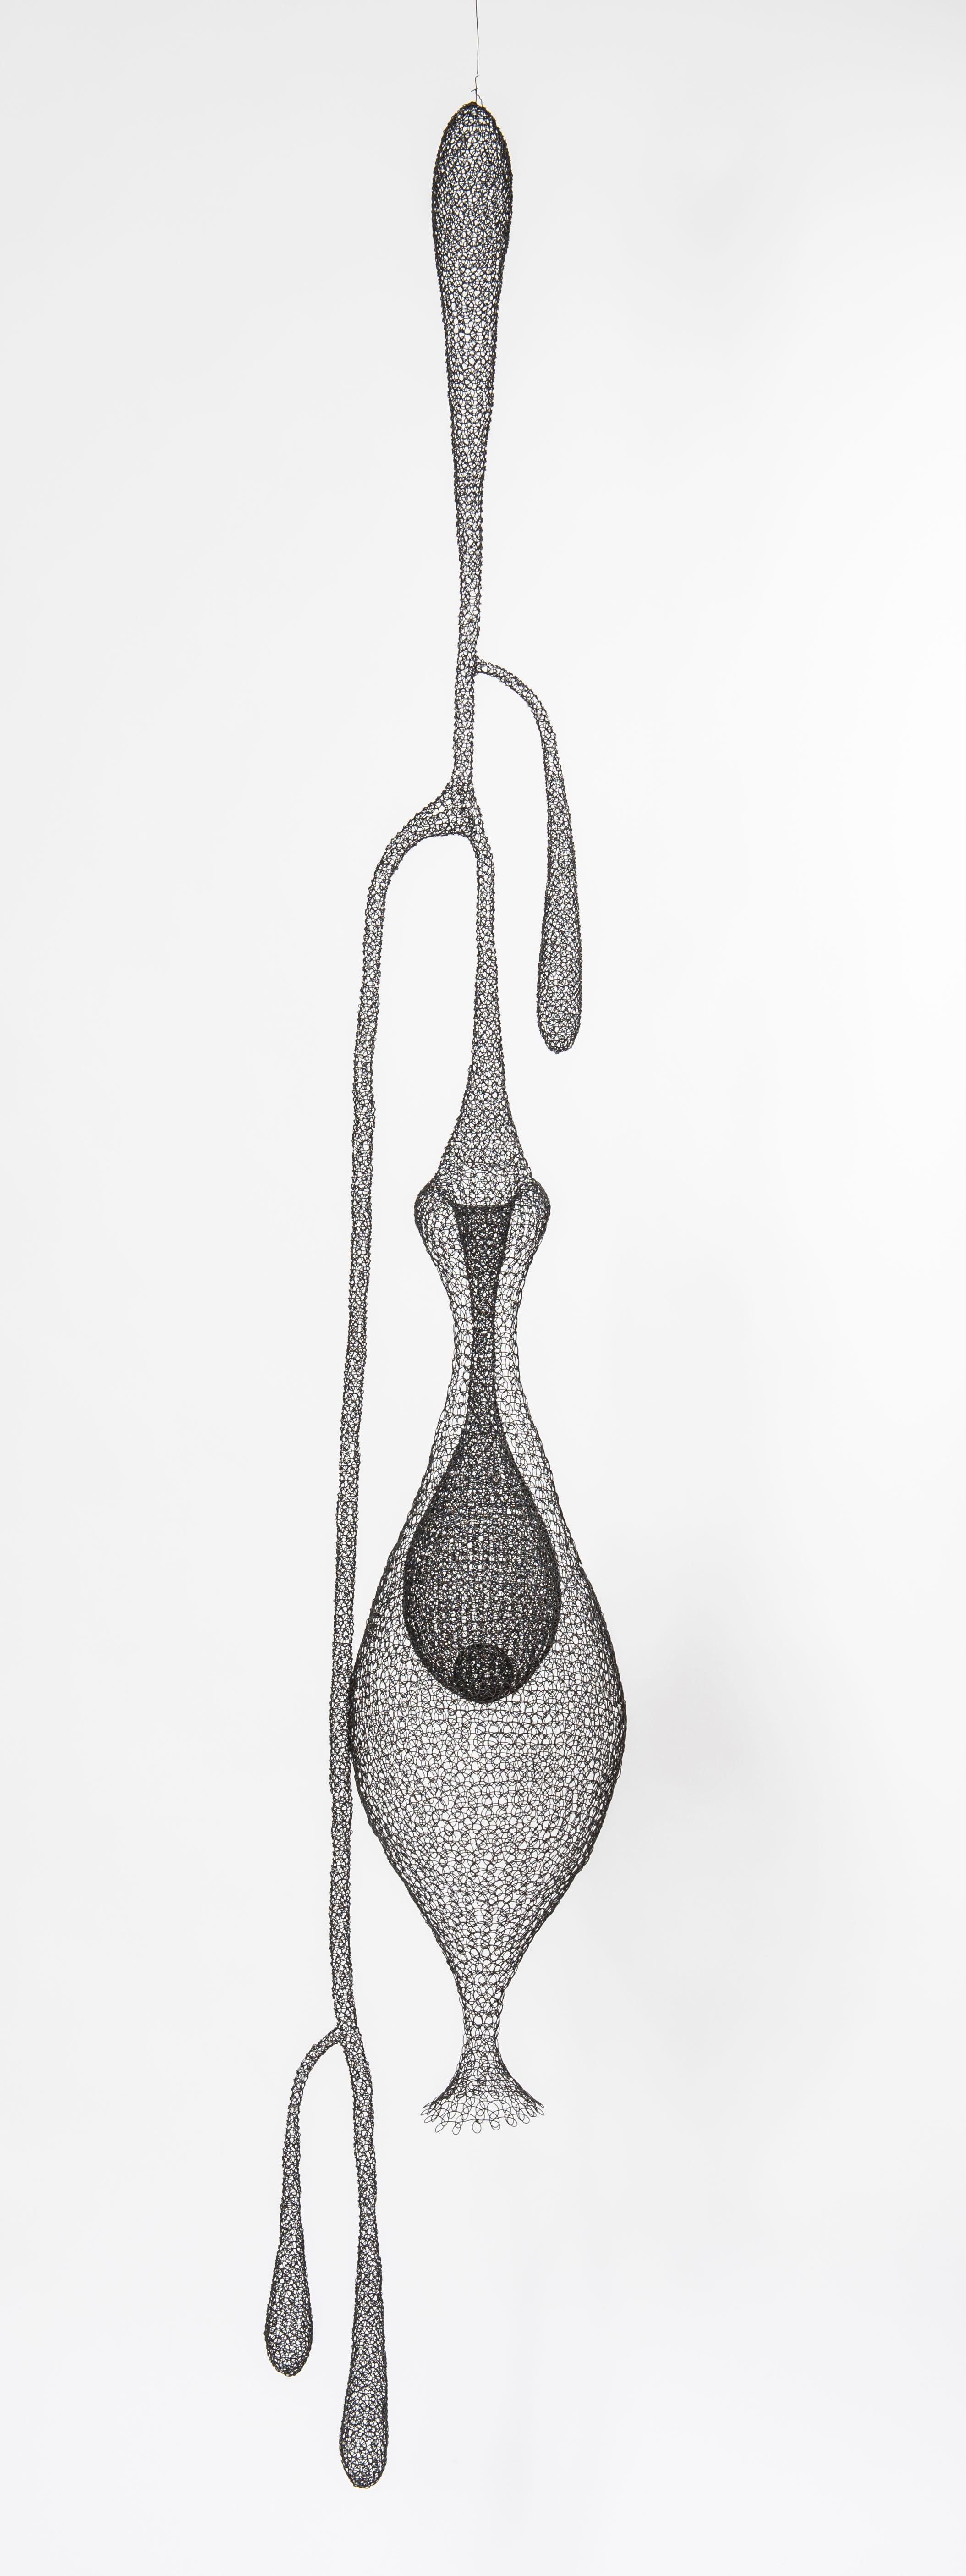 Delphine Grandvaux Figurative Sculpture - "Cocoon II", Hand Knitted Metal Mesh Transparent Airy Pendant Sculpture